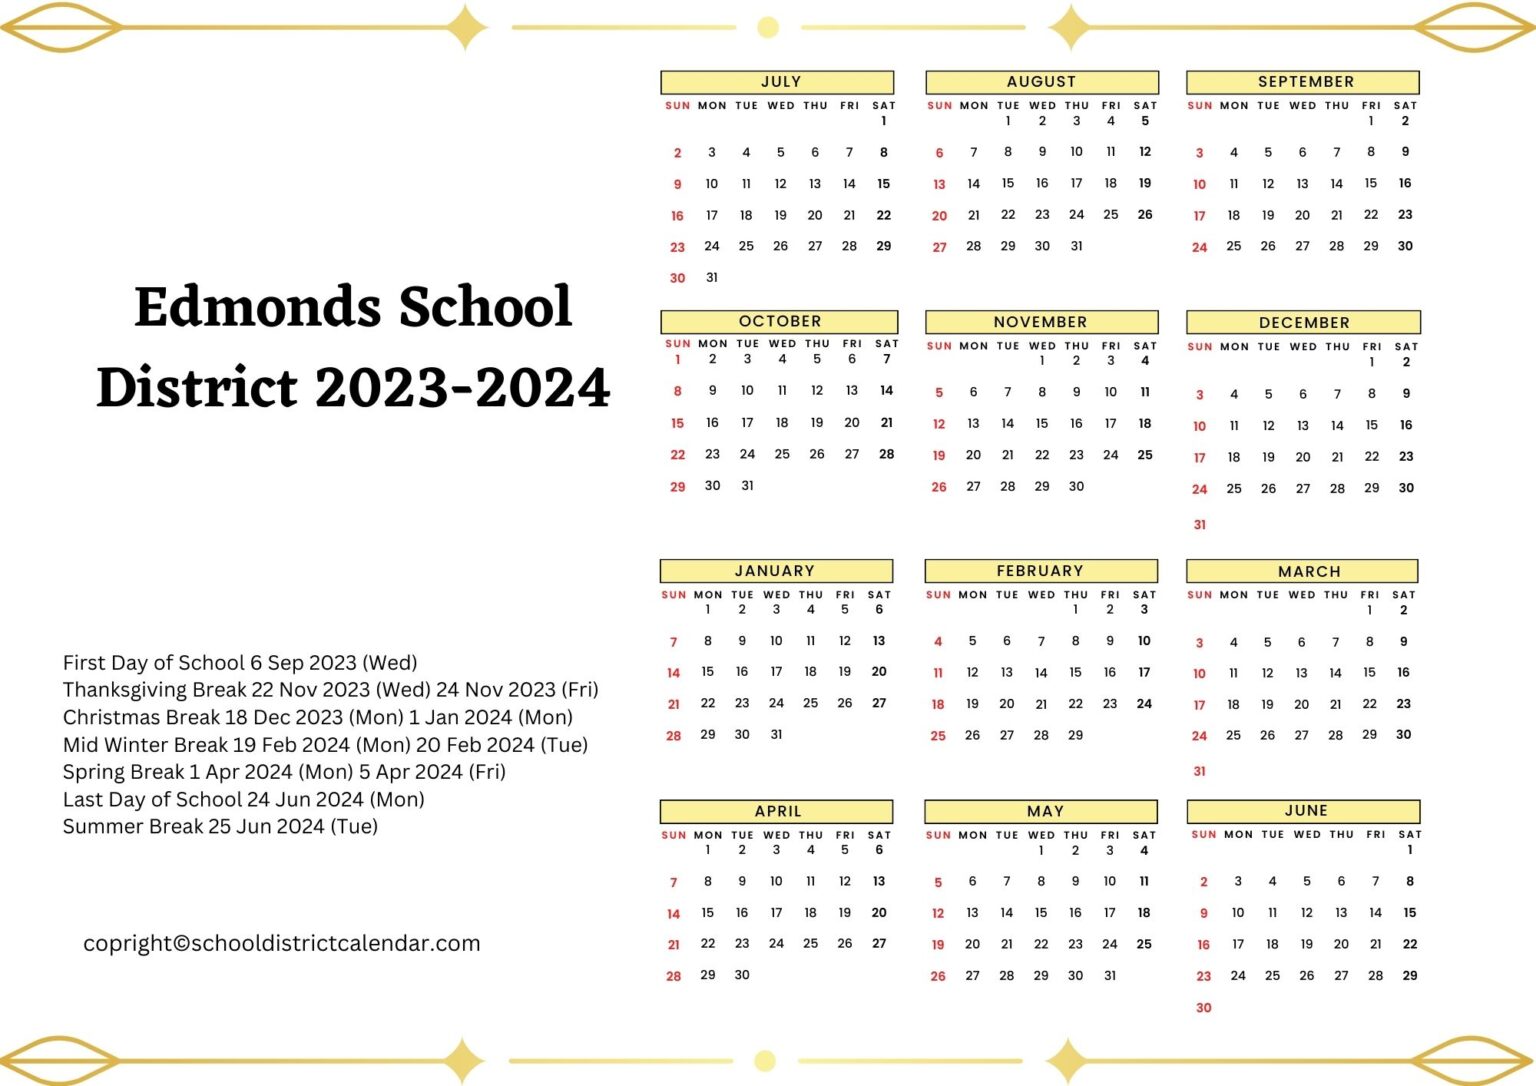 edmonds-school-district-calendar-holidays-2023-2024